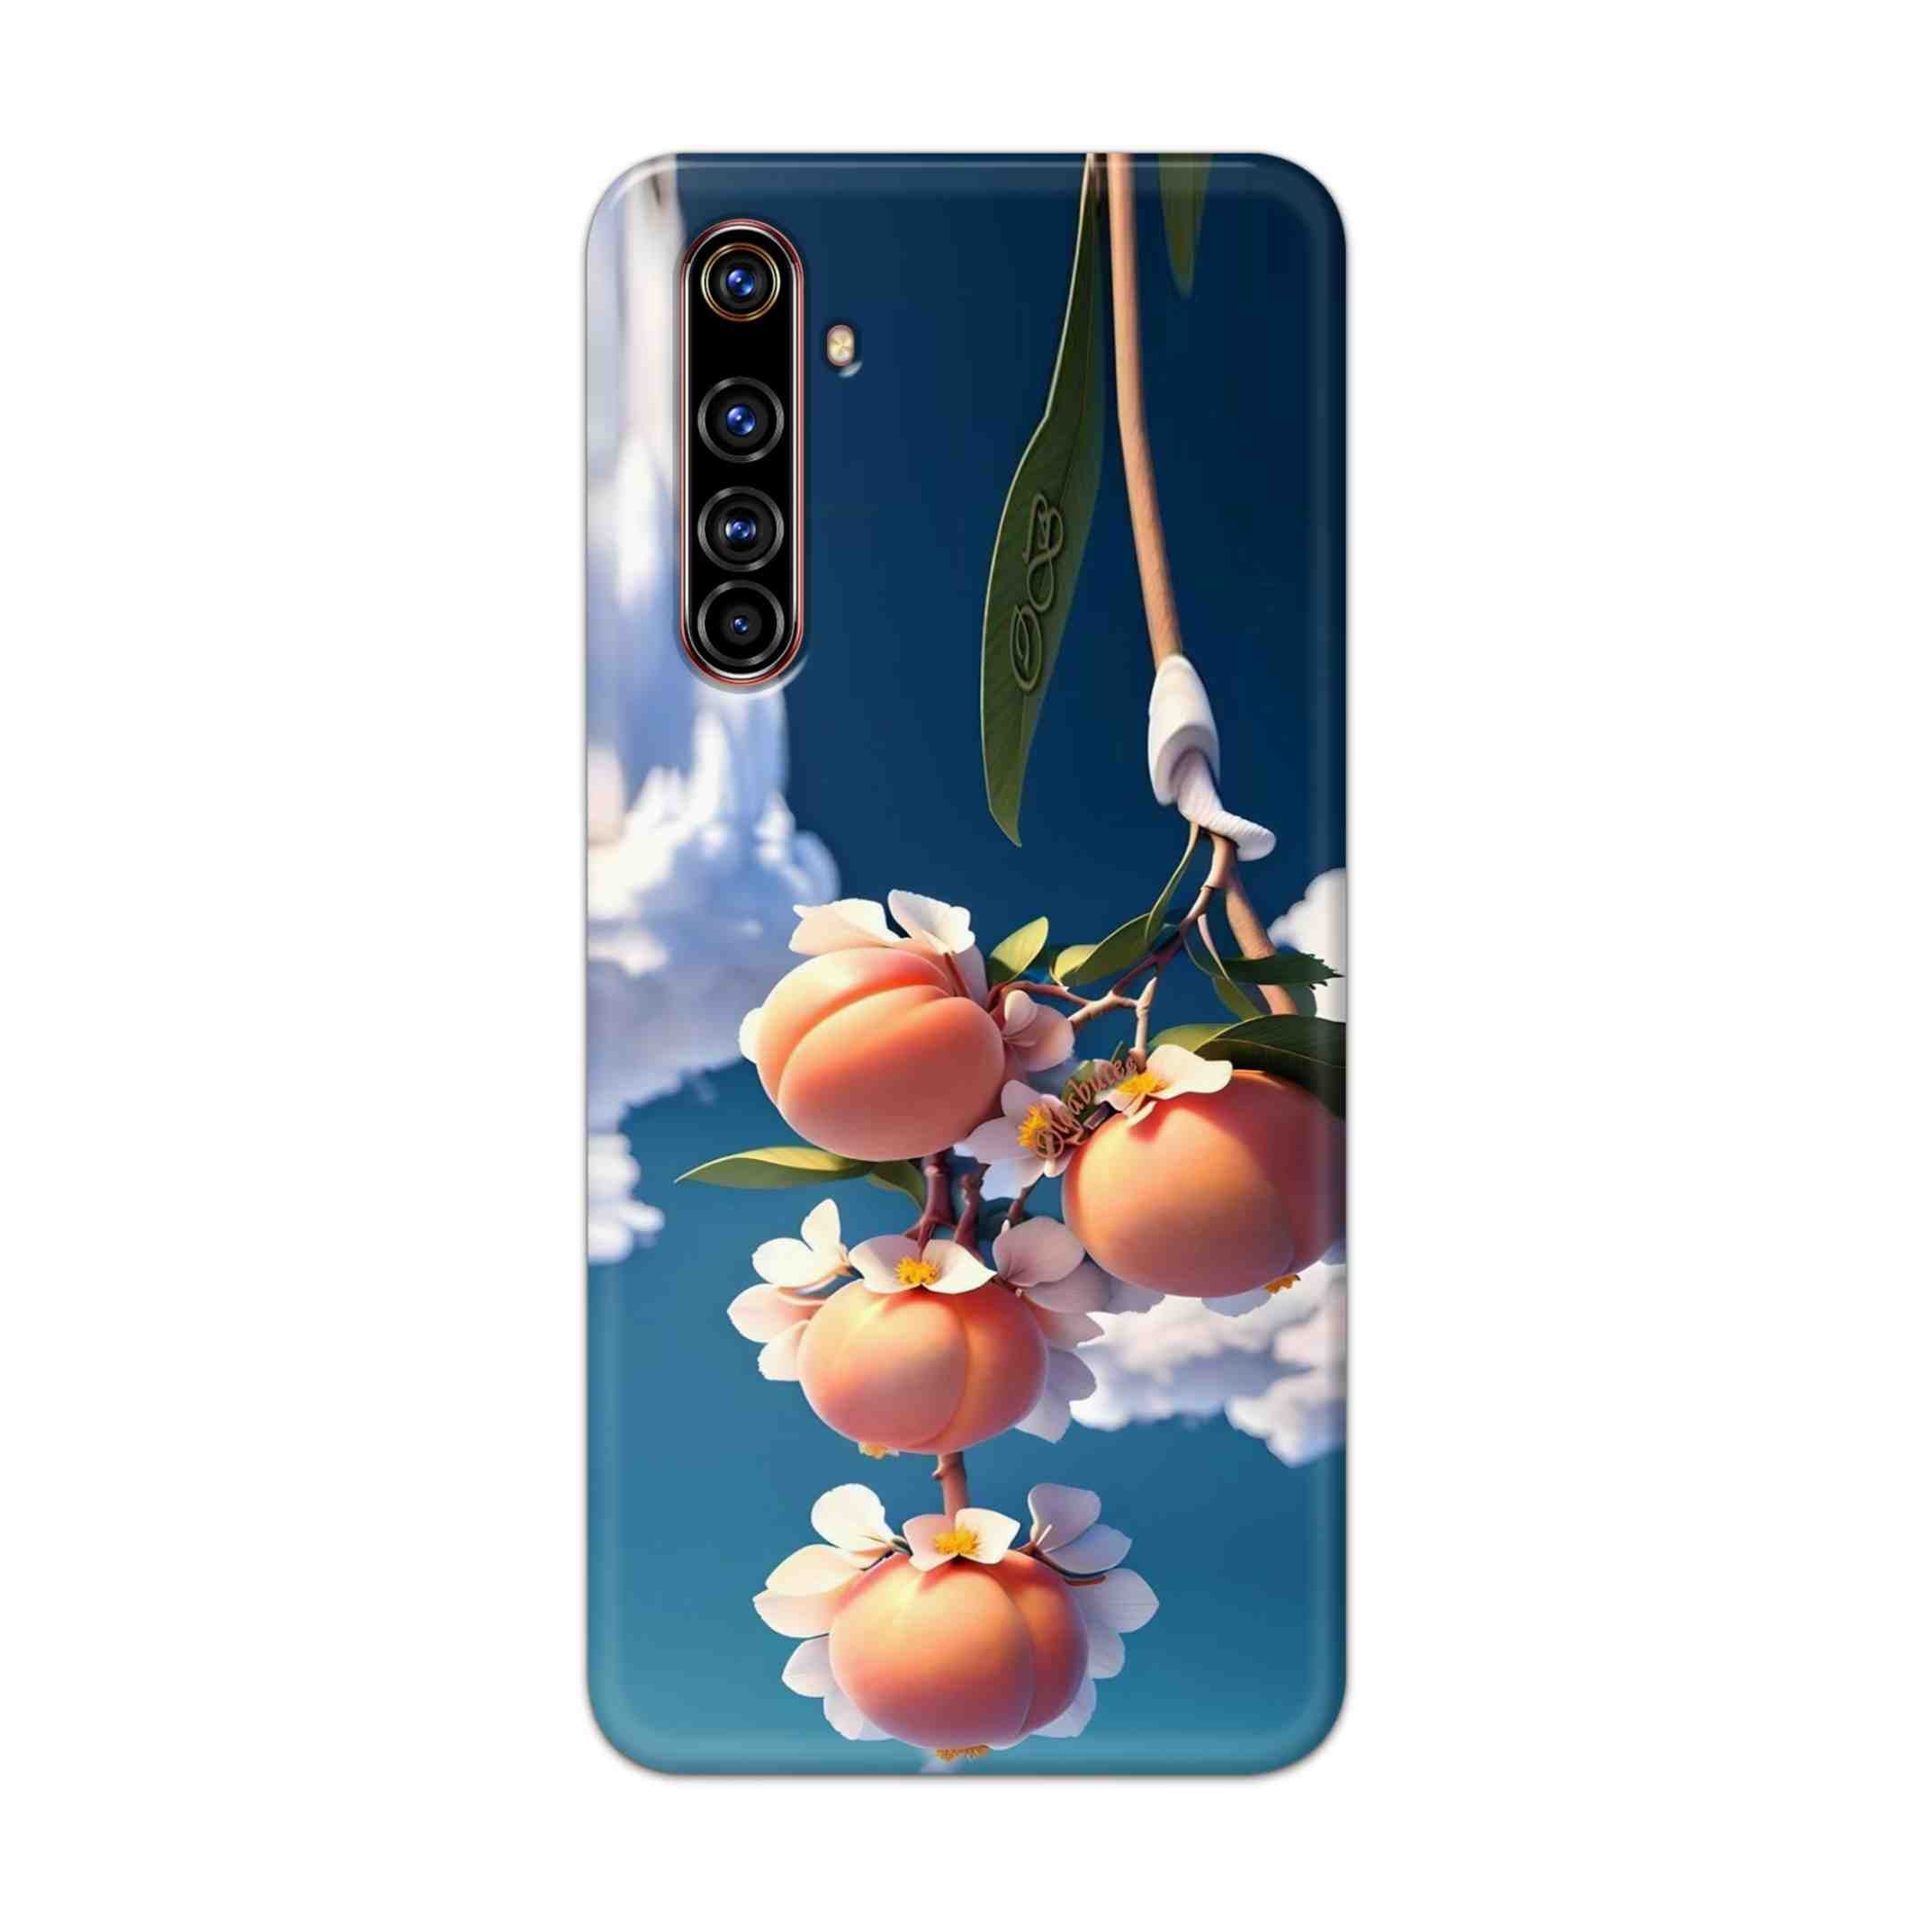 Buy Fruit Hard Back Mobile Phone Case Cover For Realme X50 Pro Online